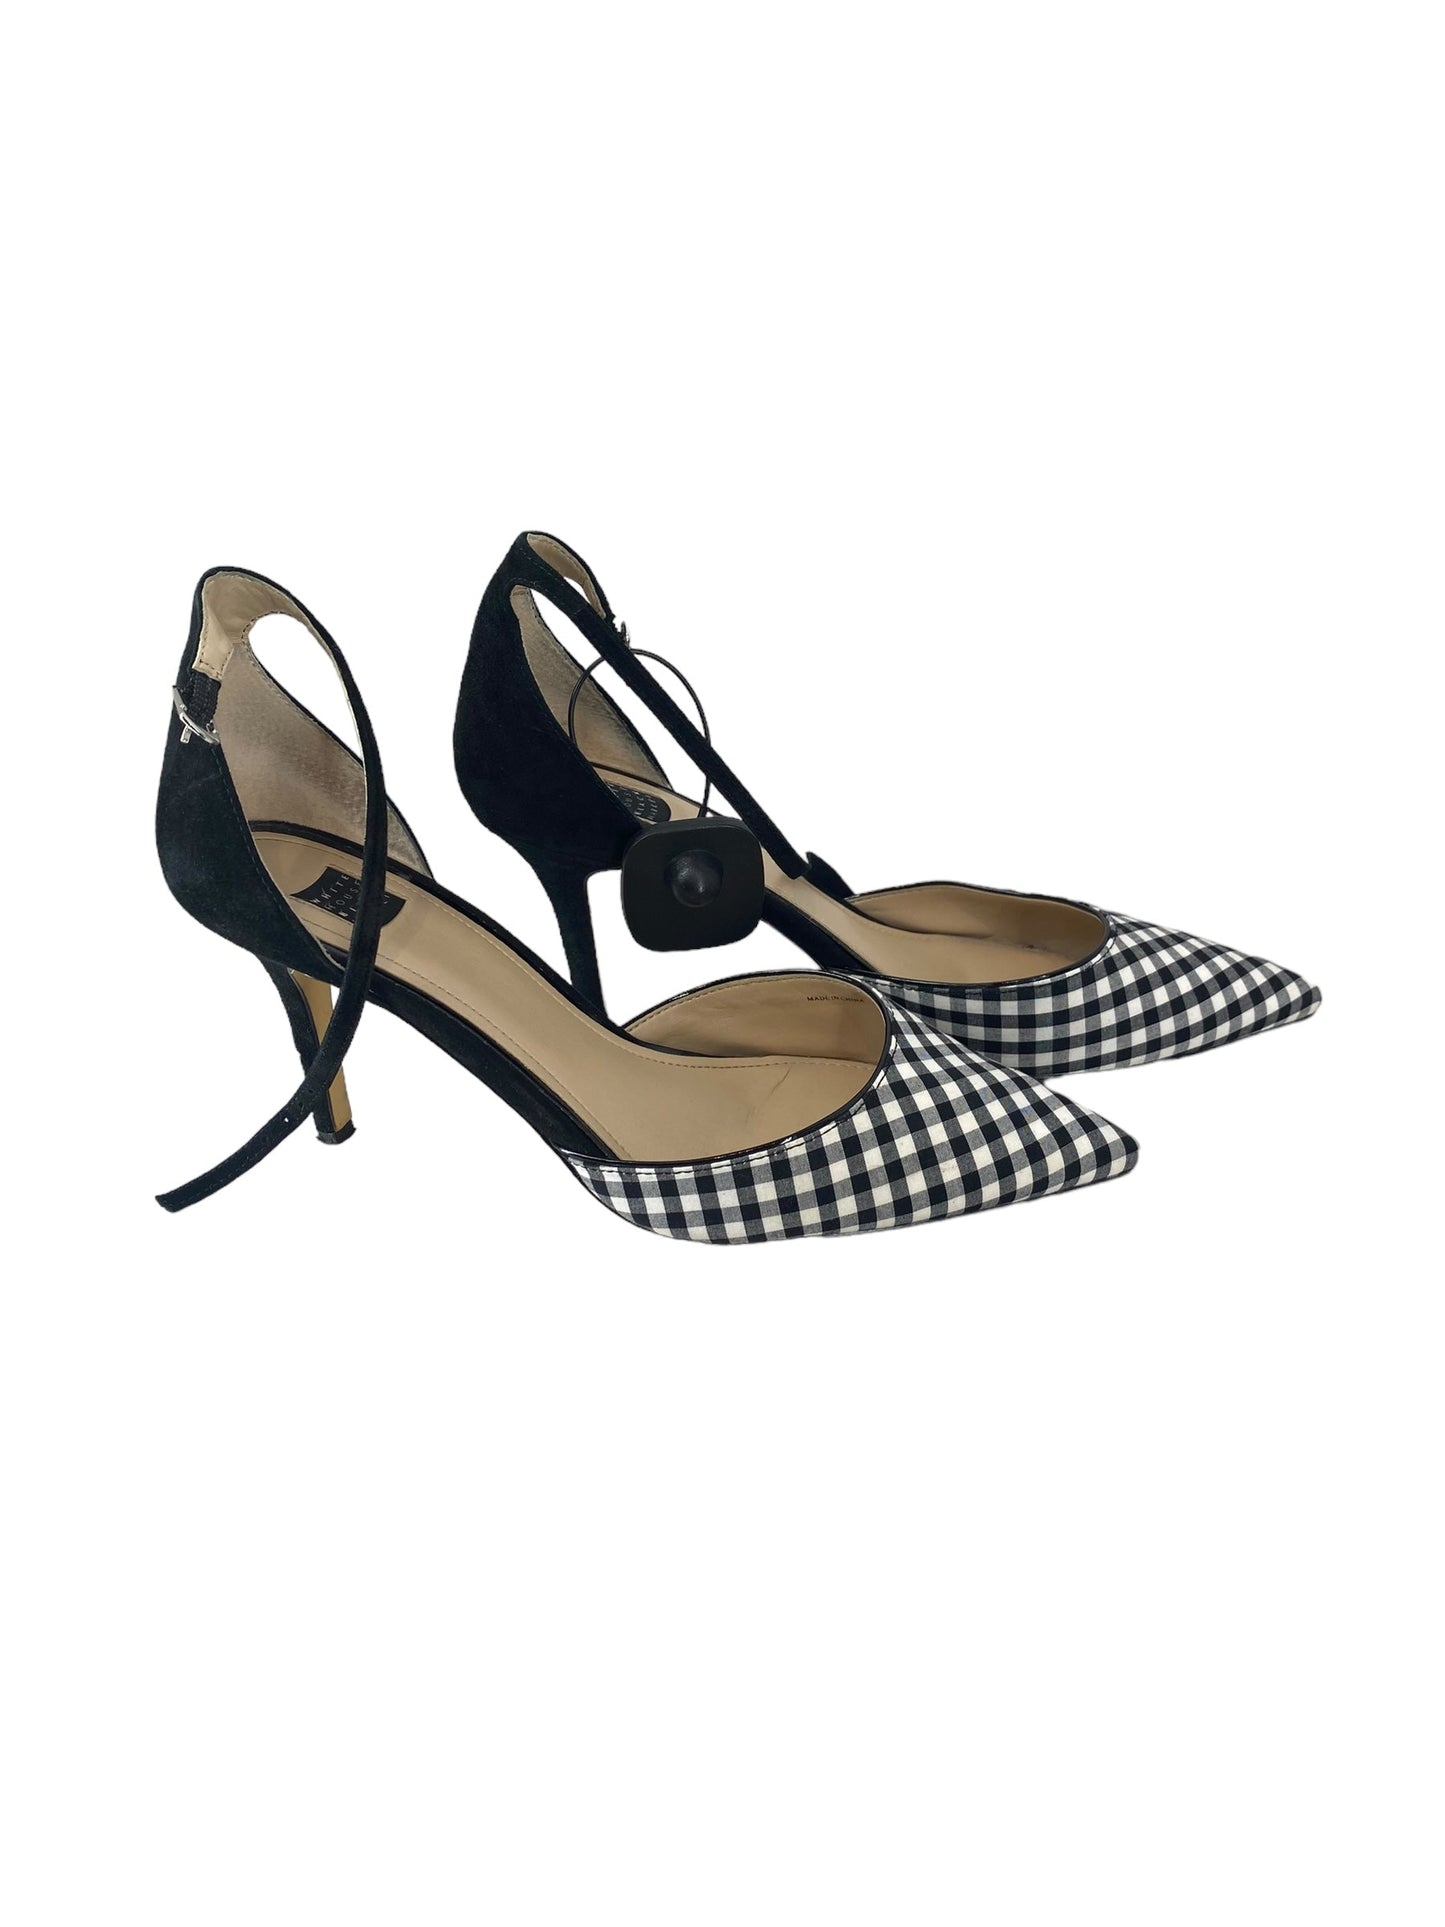 Black & White Shoes Heels Stiletto White House Black Market, Size 9